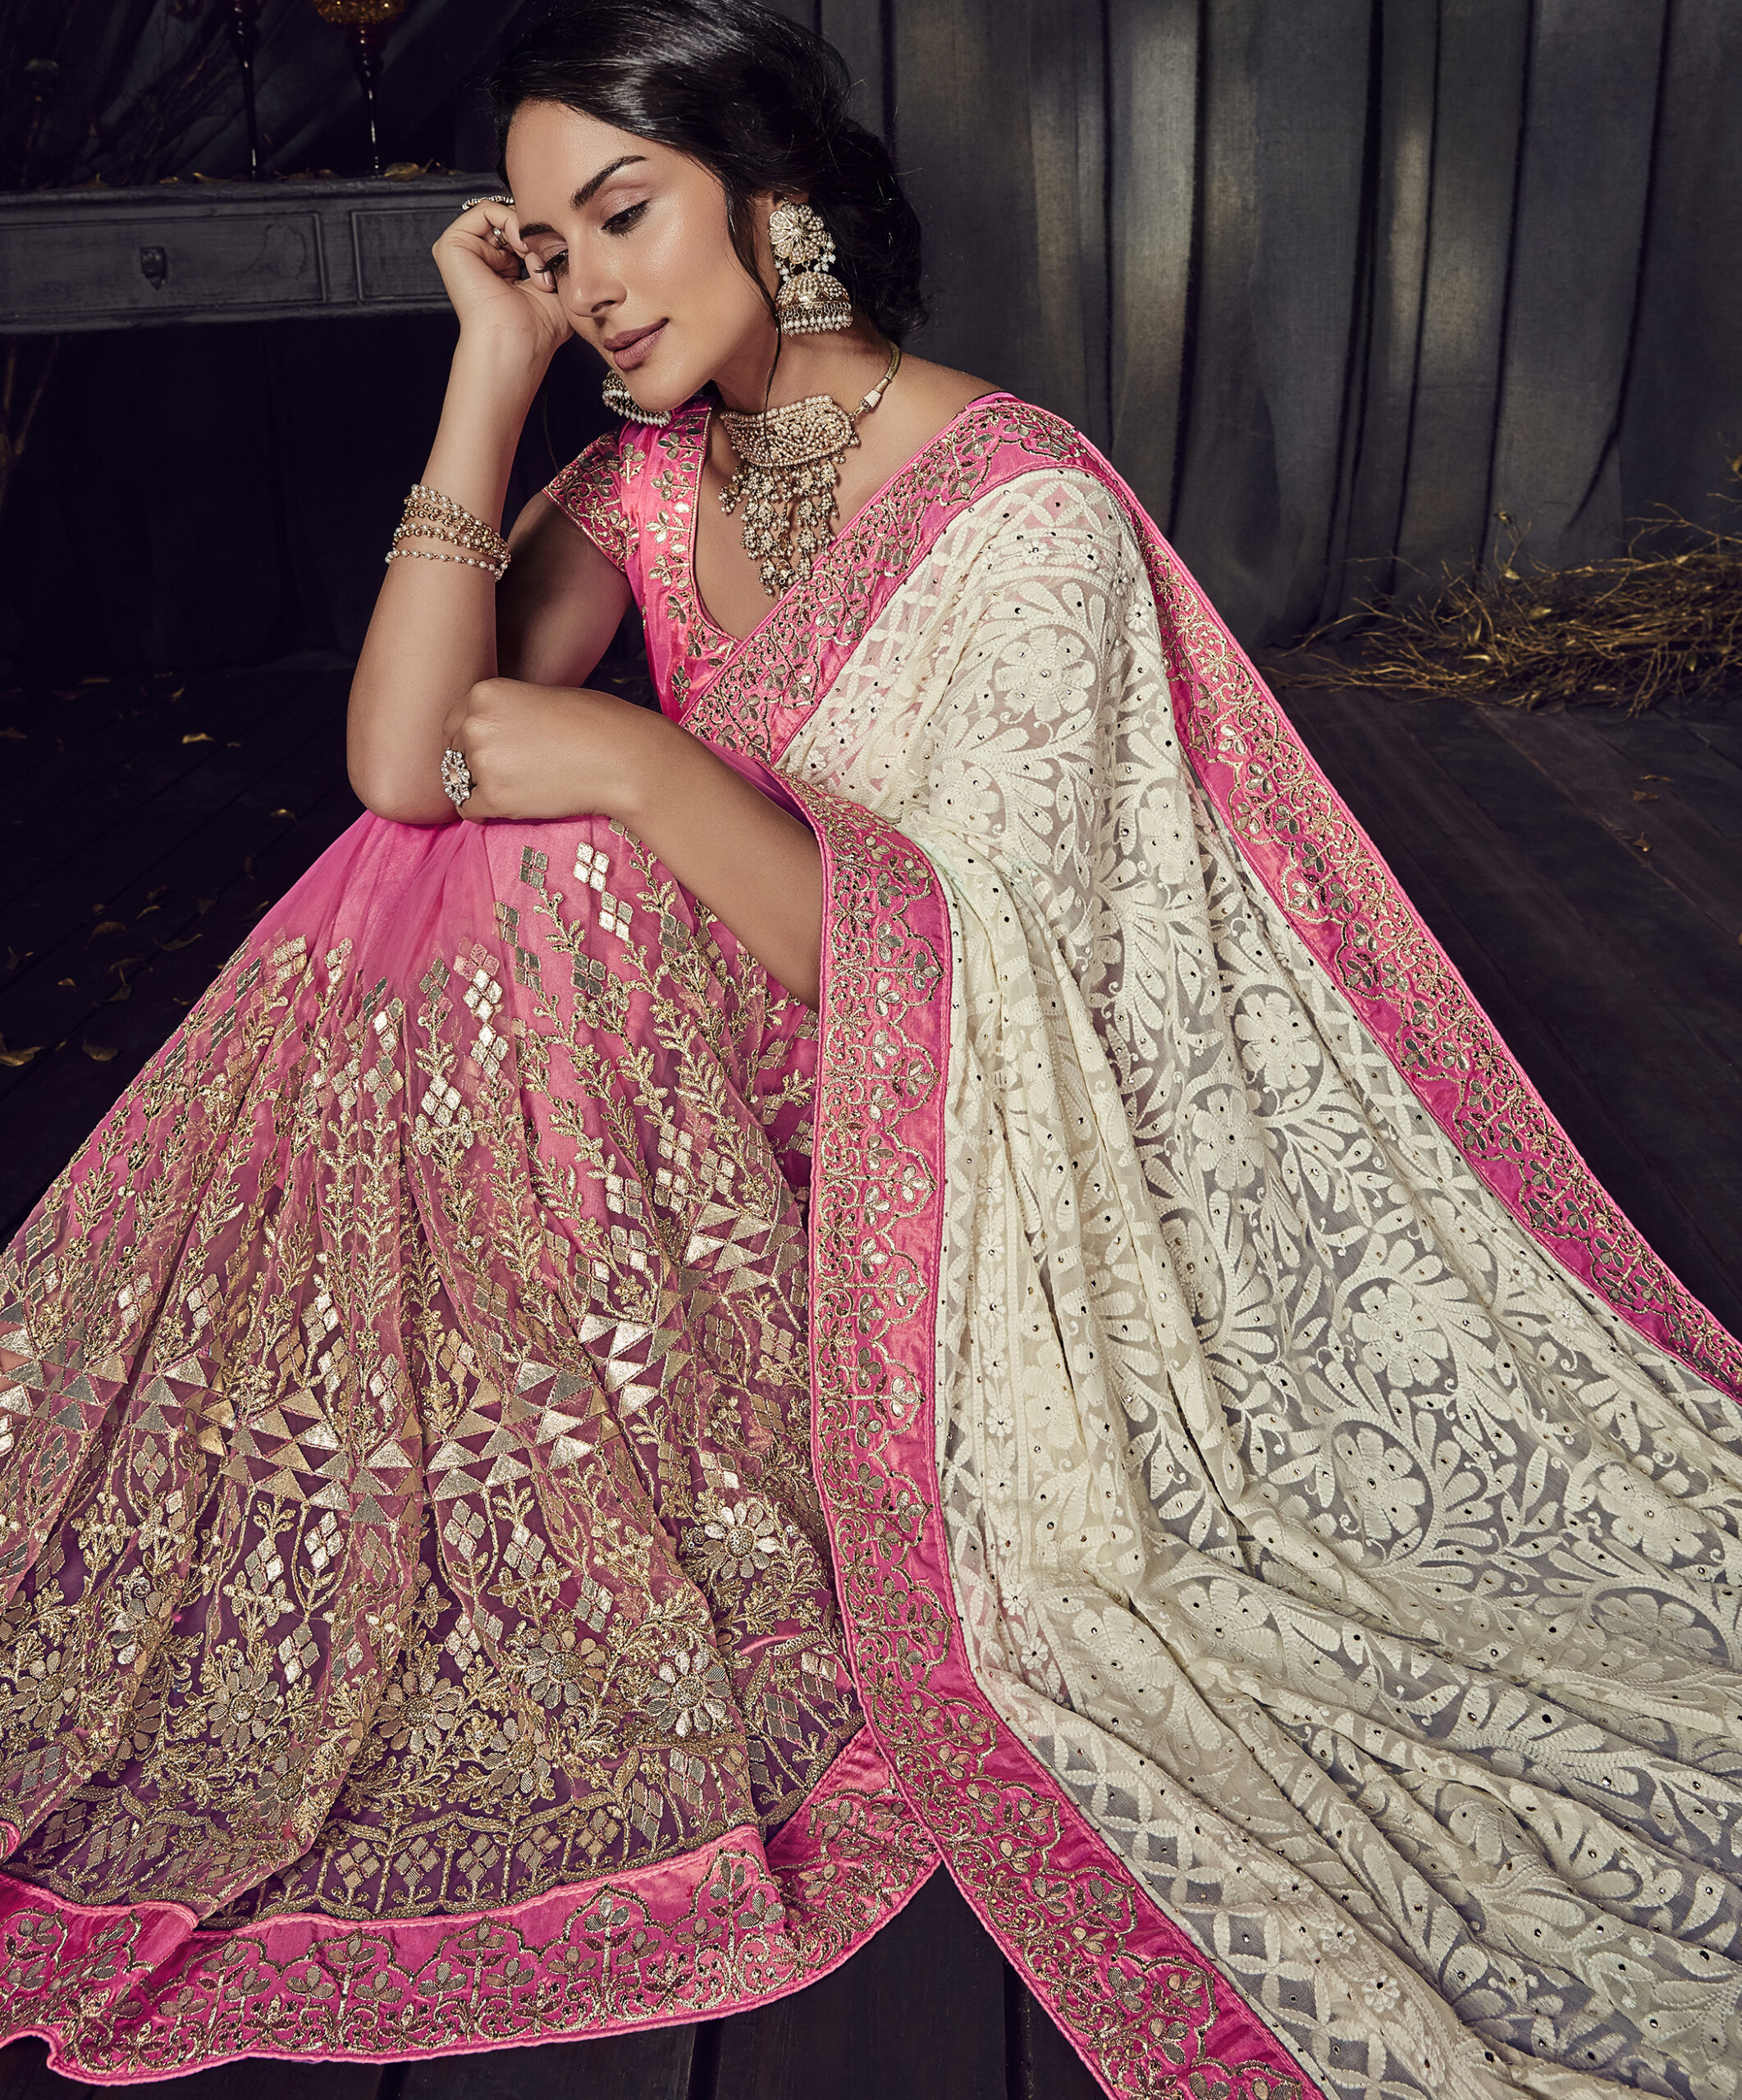 Designer Wedding Lehenga Saree in Fine Handembroidery - Rana's by Kshitija